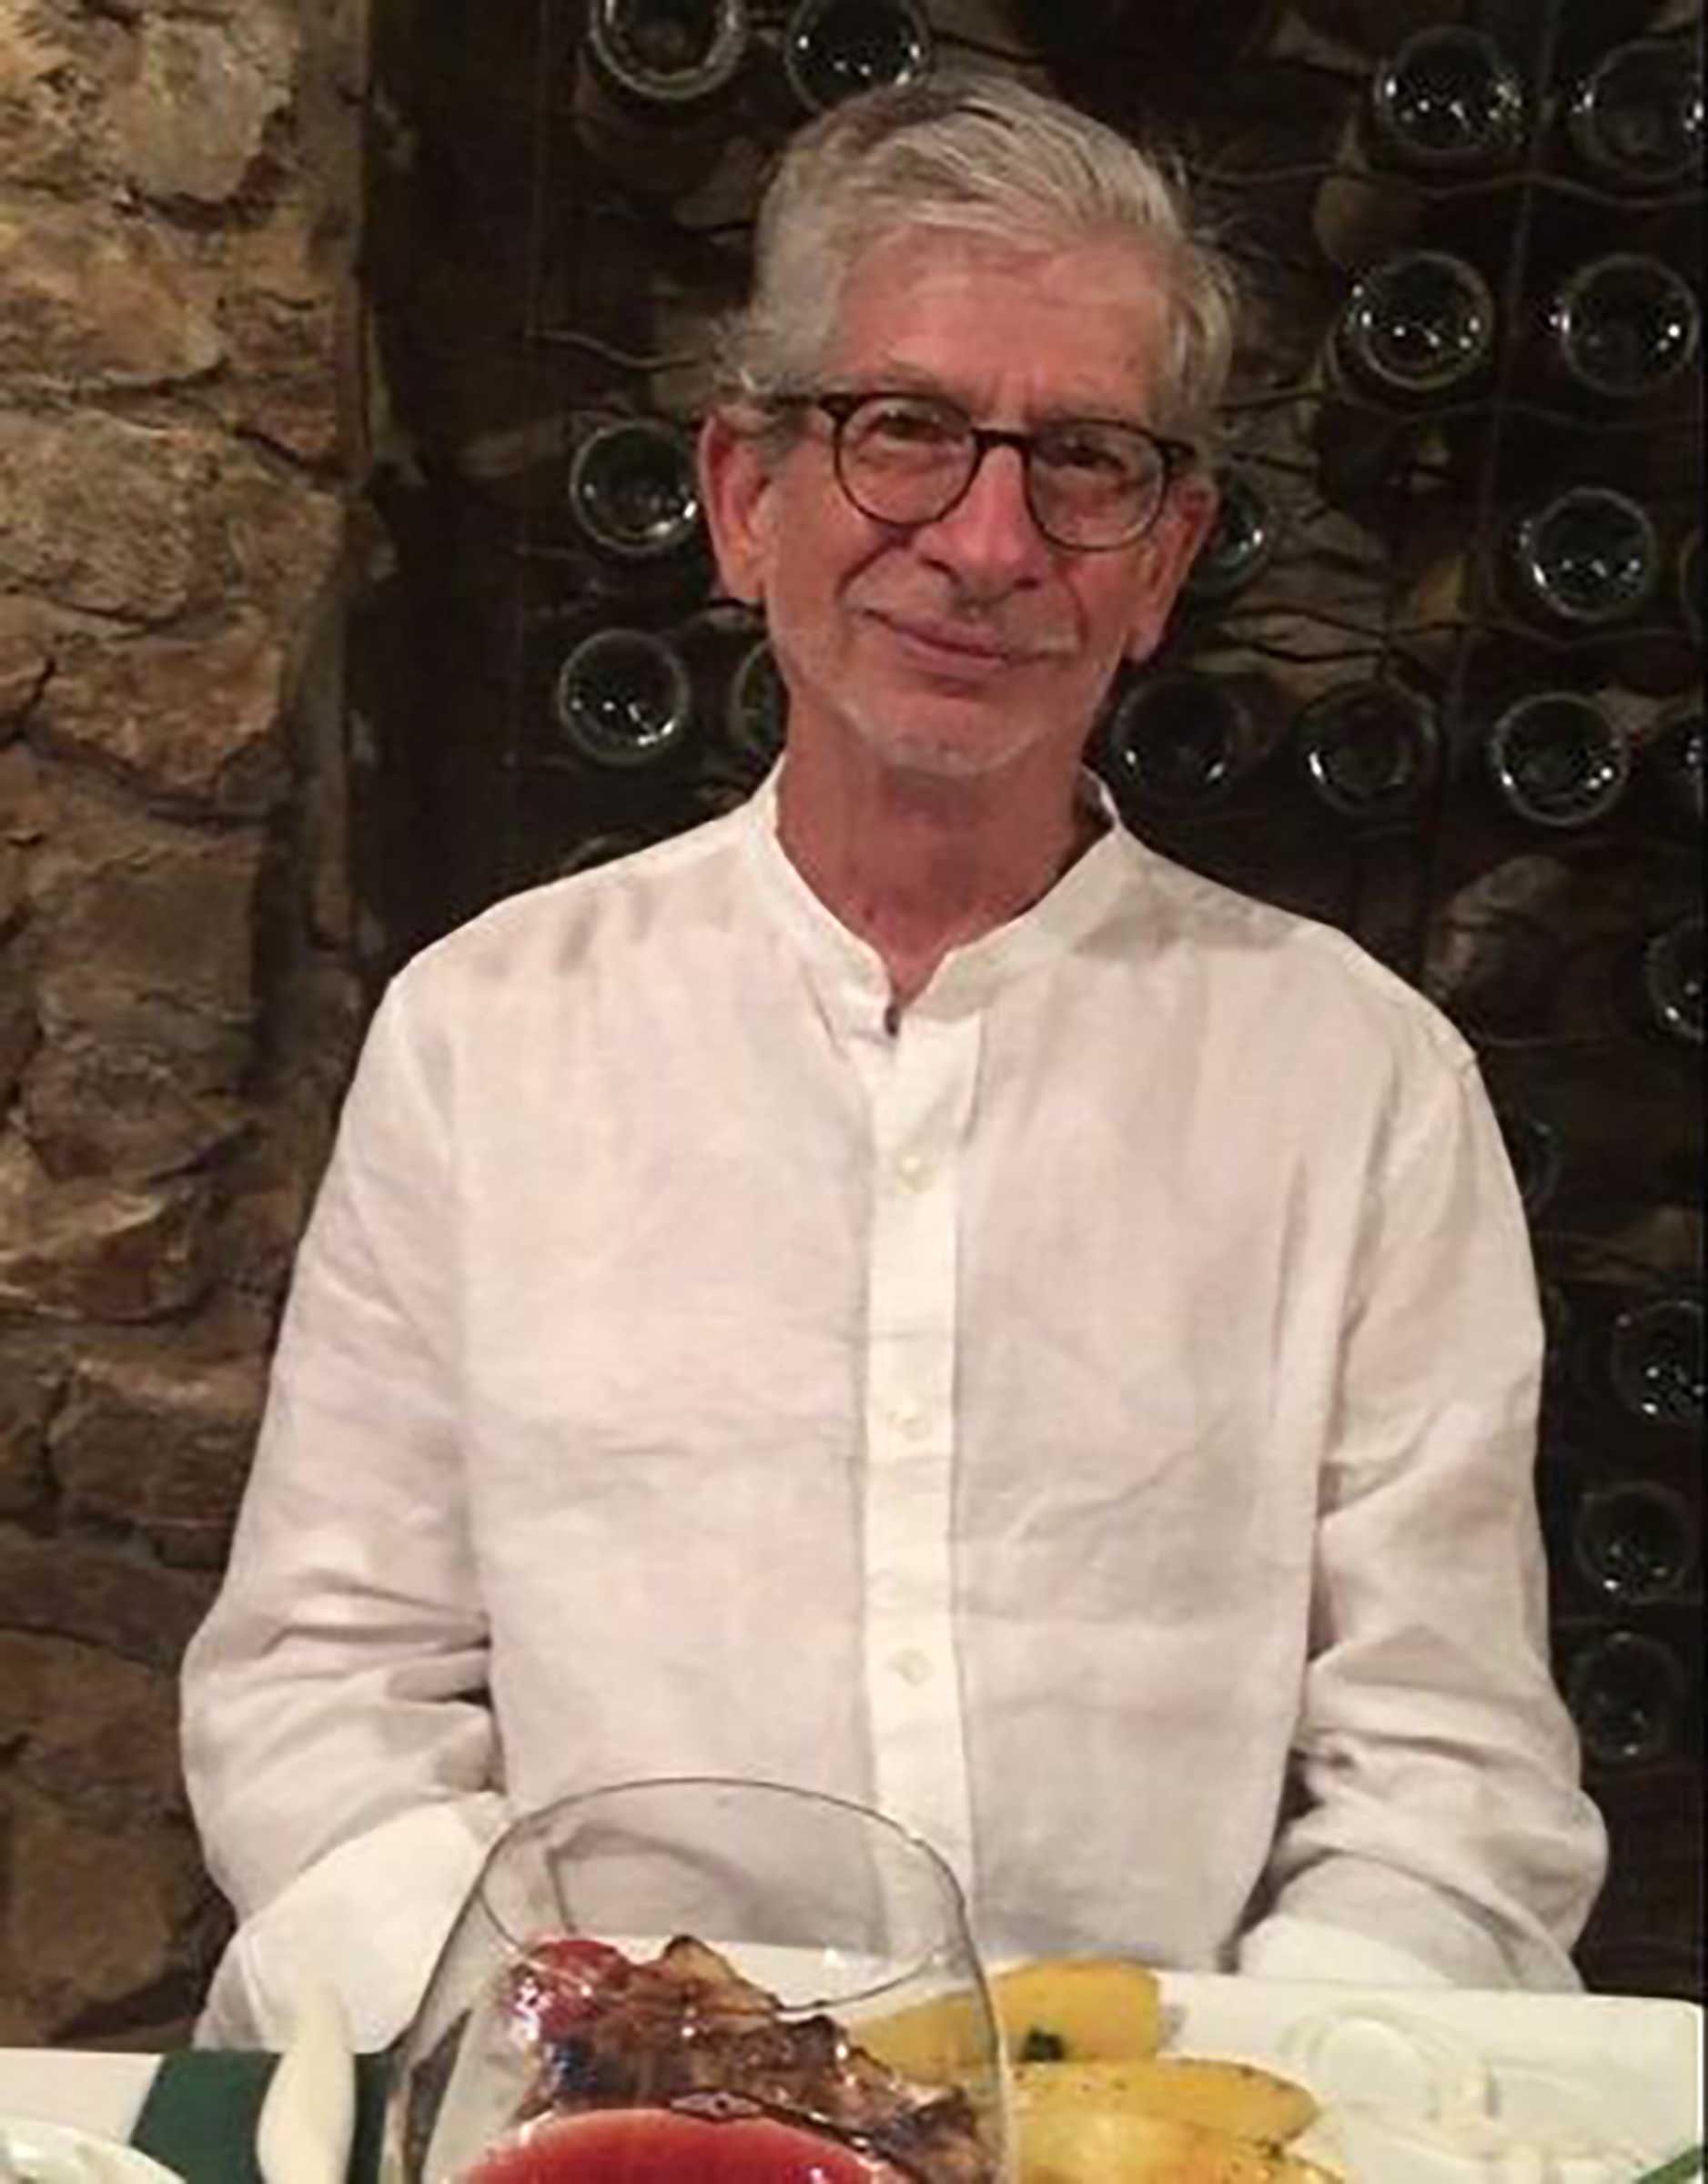 Winemaker David Bergin